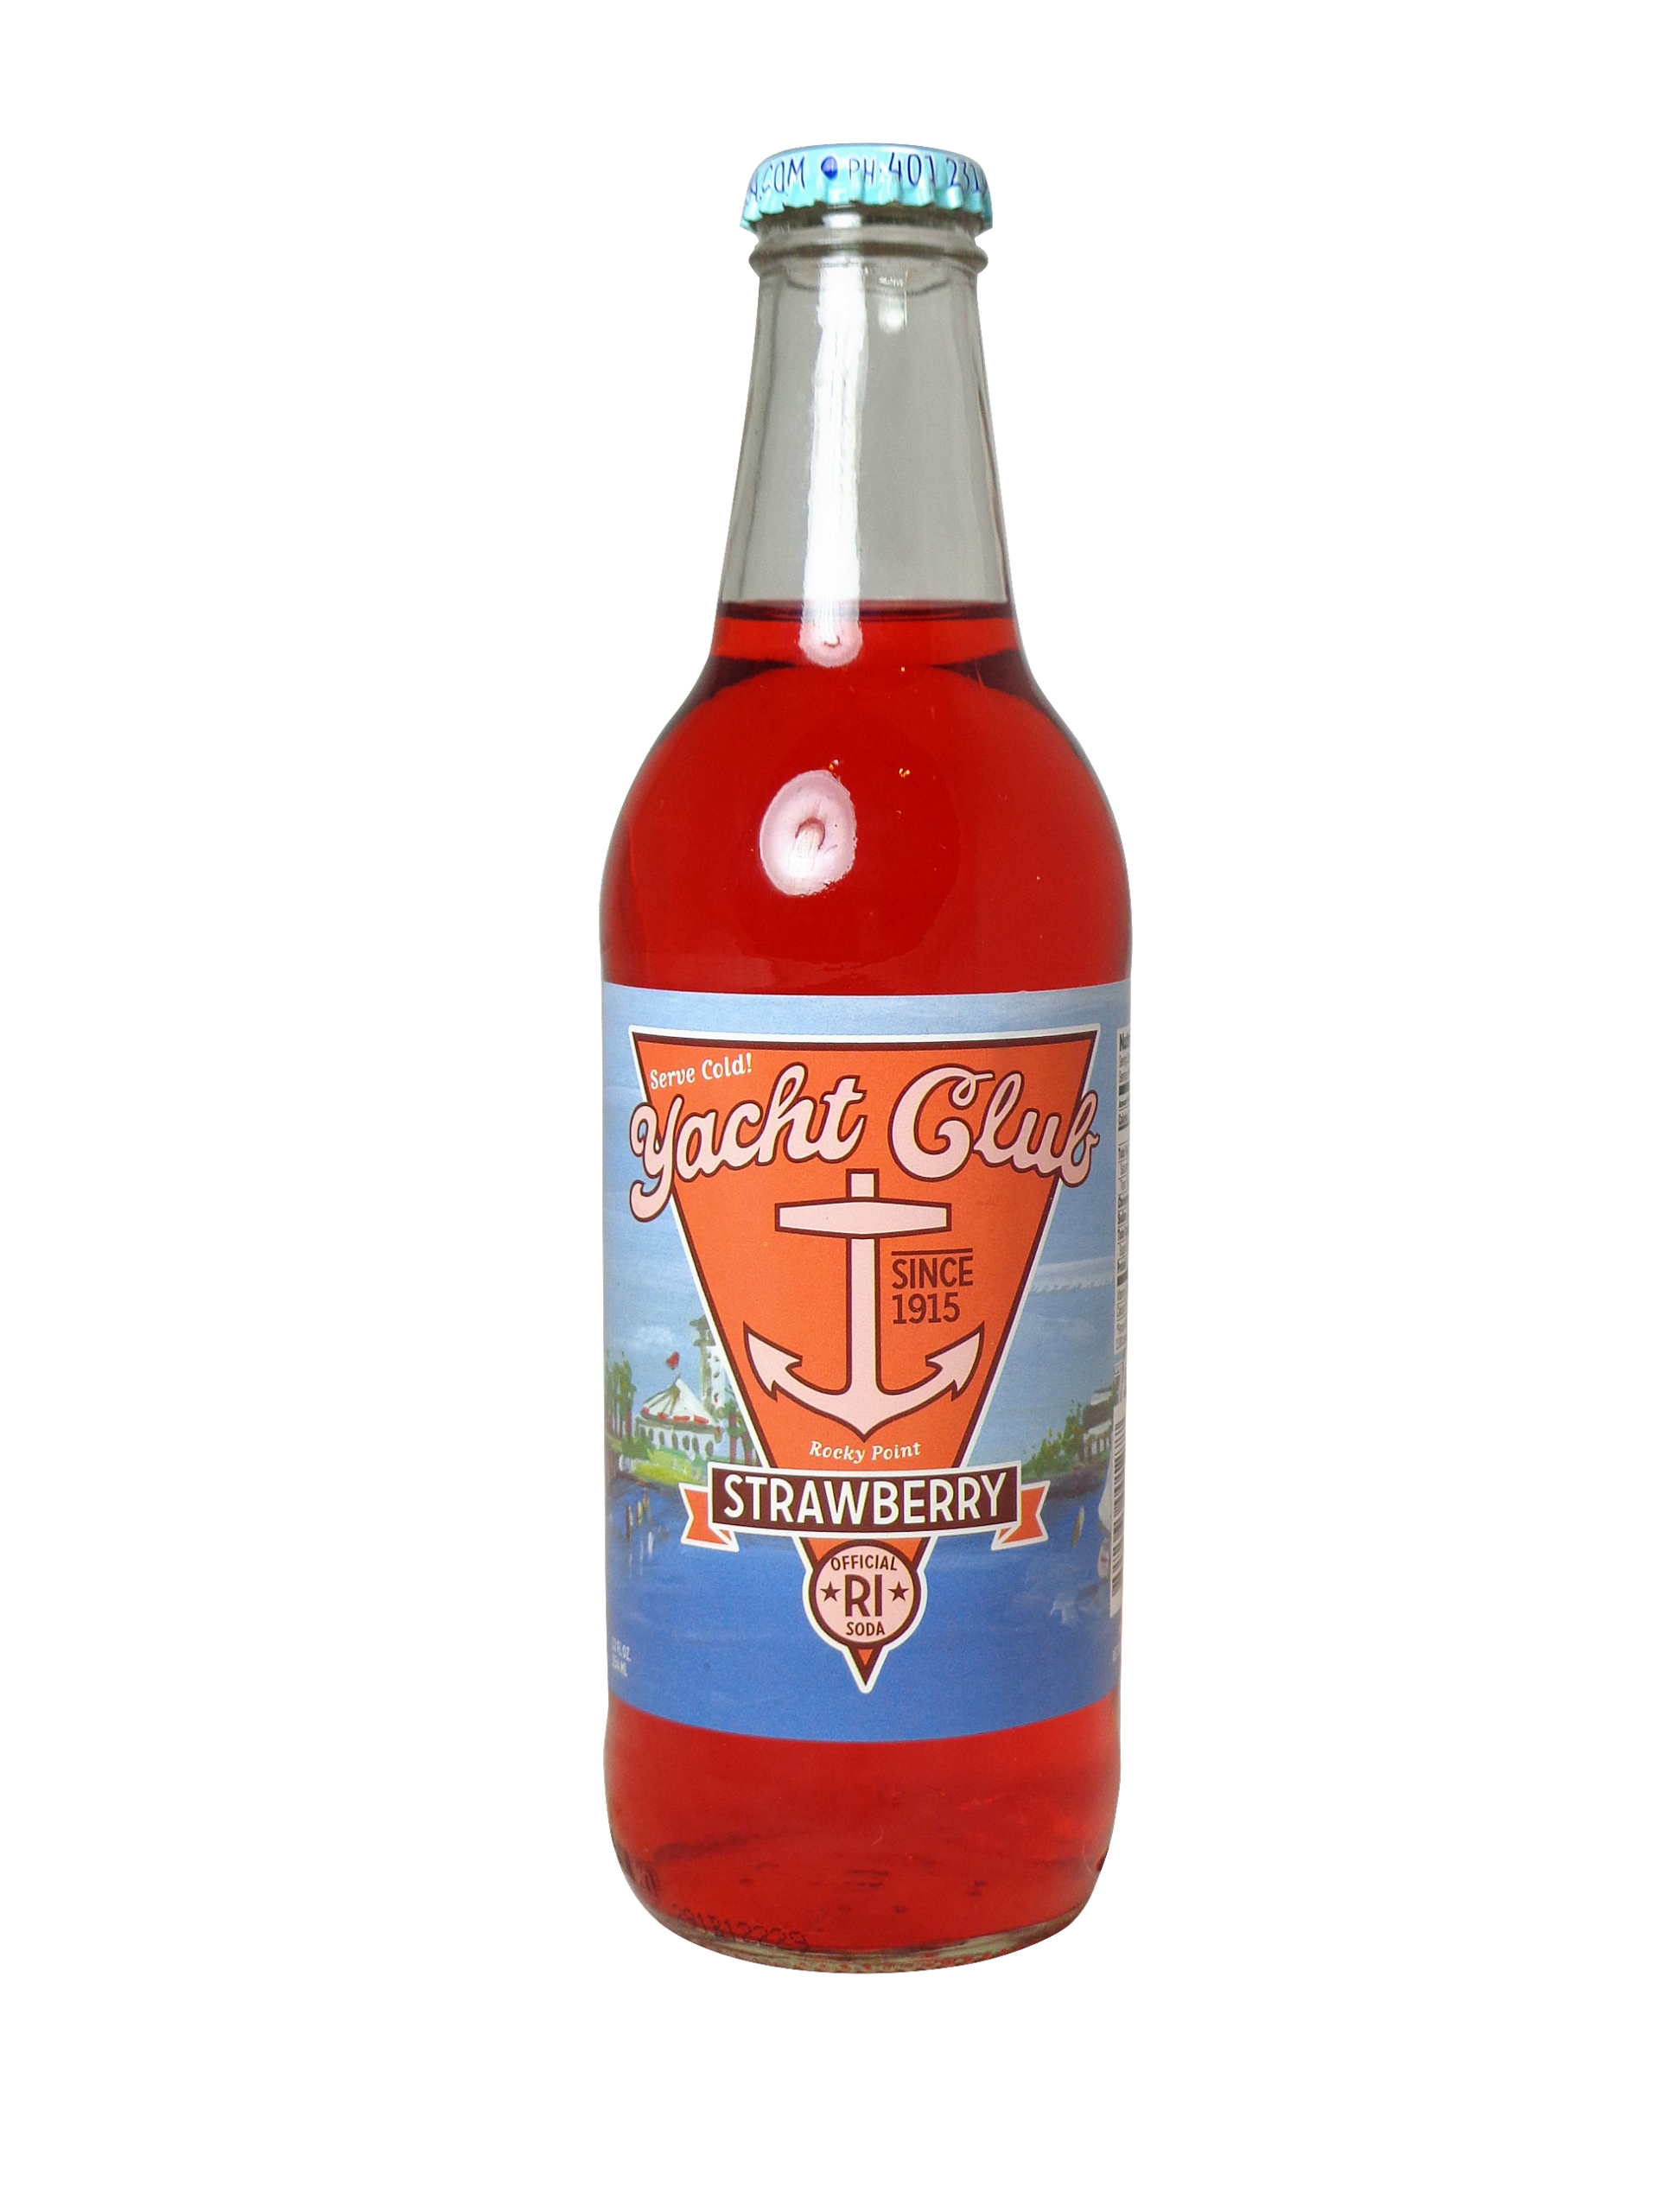 where to buy yacht club soda